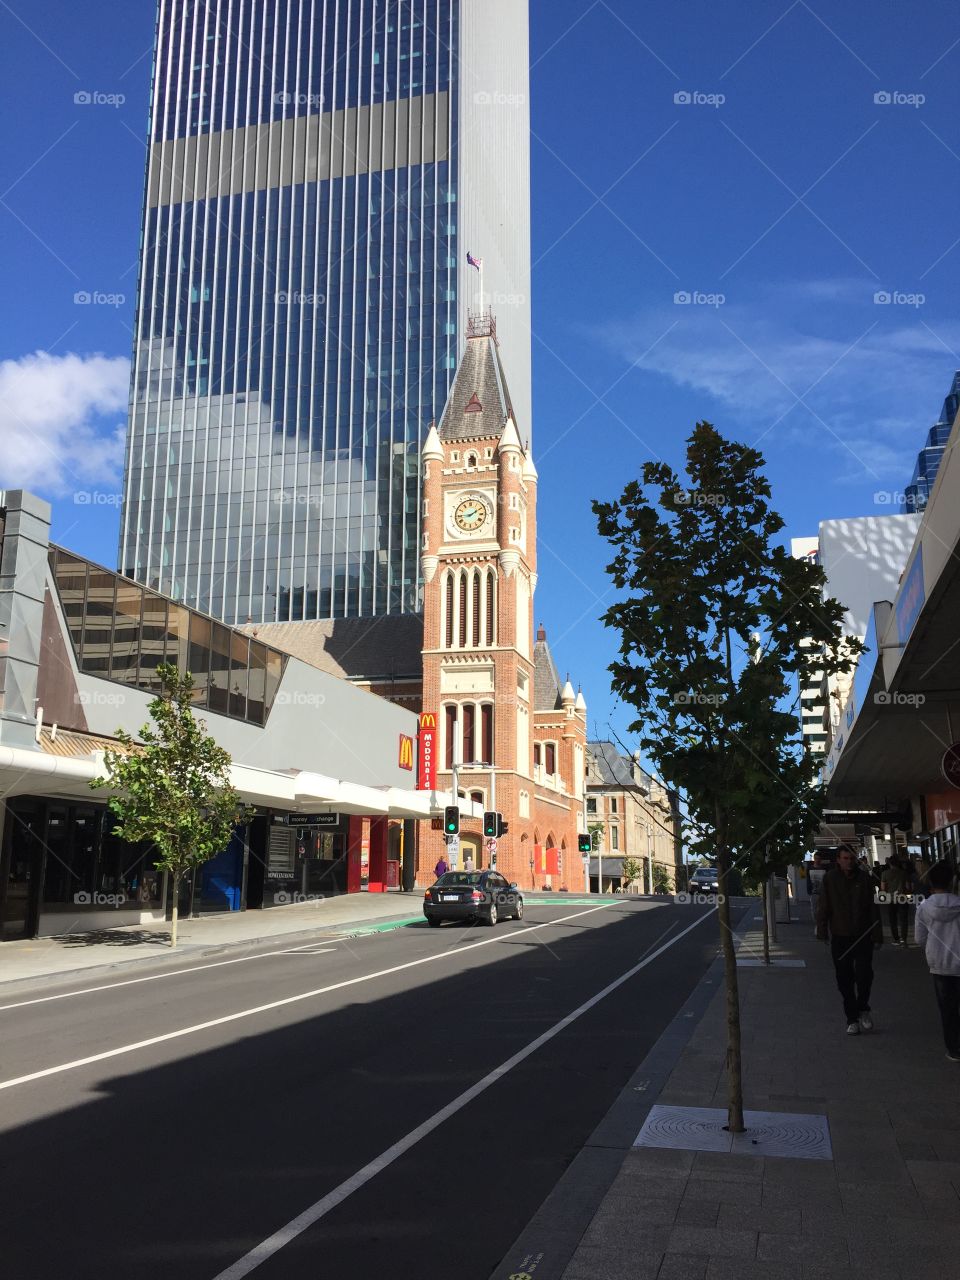 Clock tower in Perth Australia 